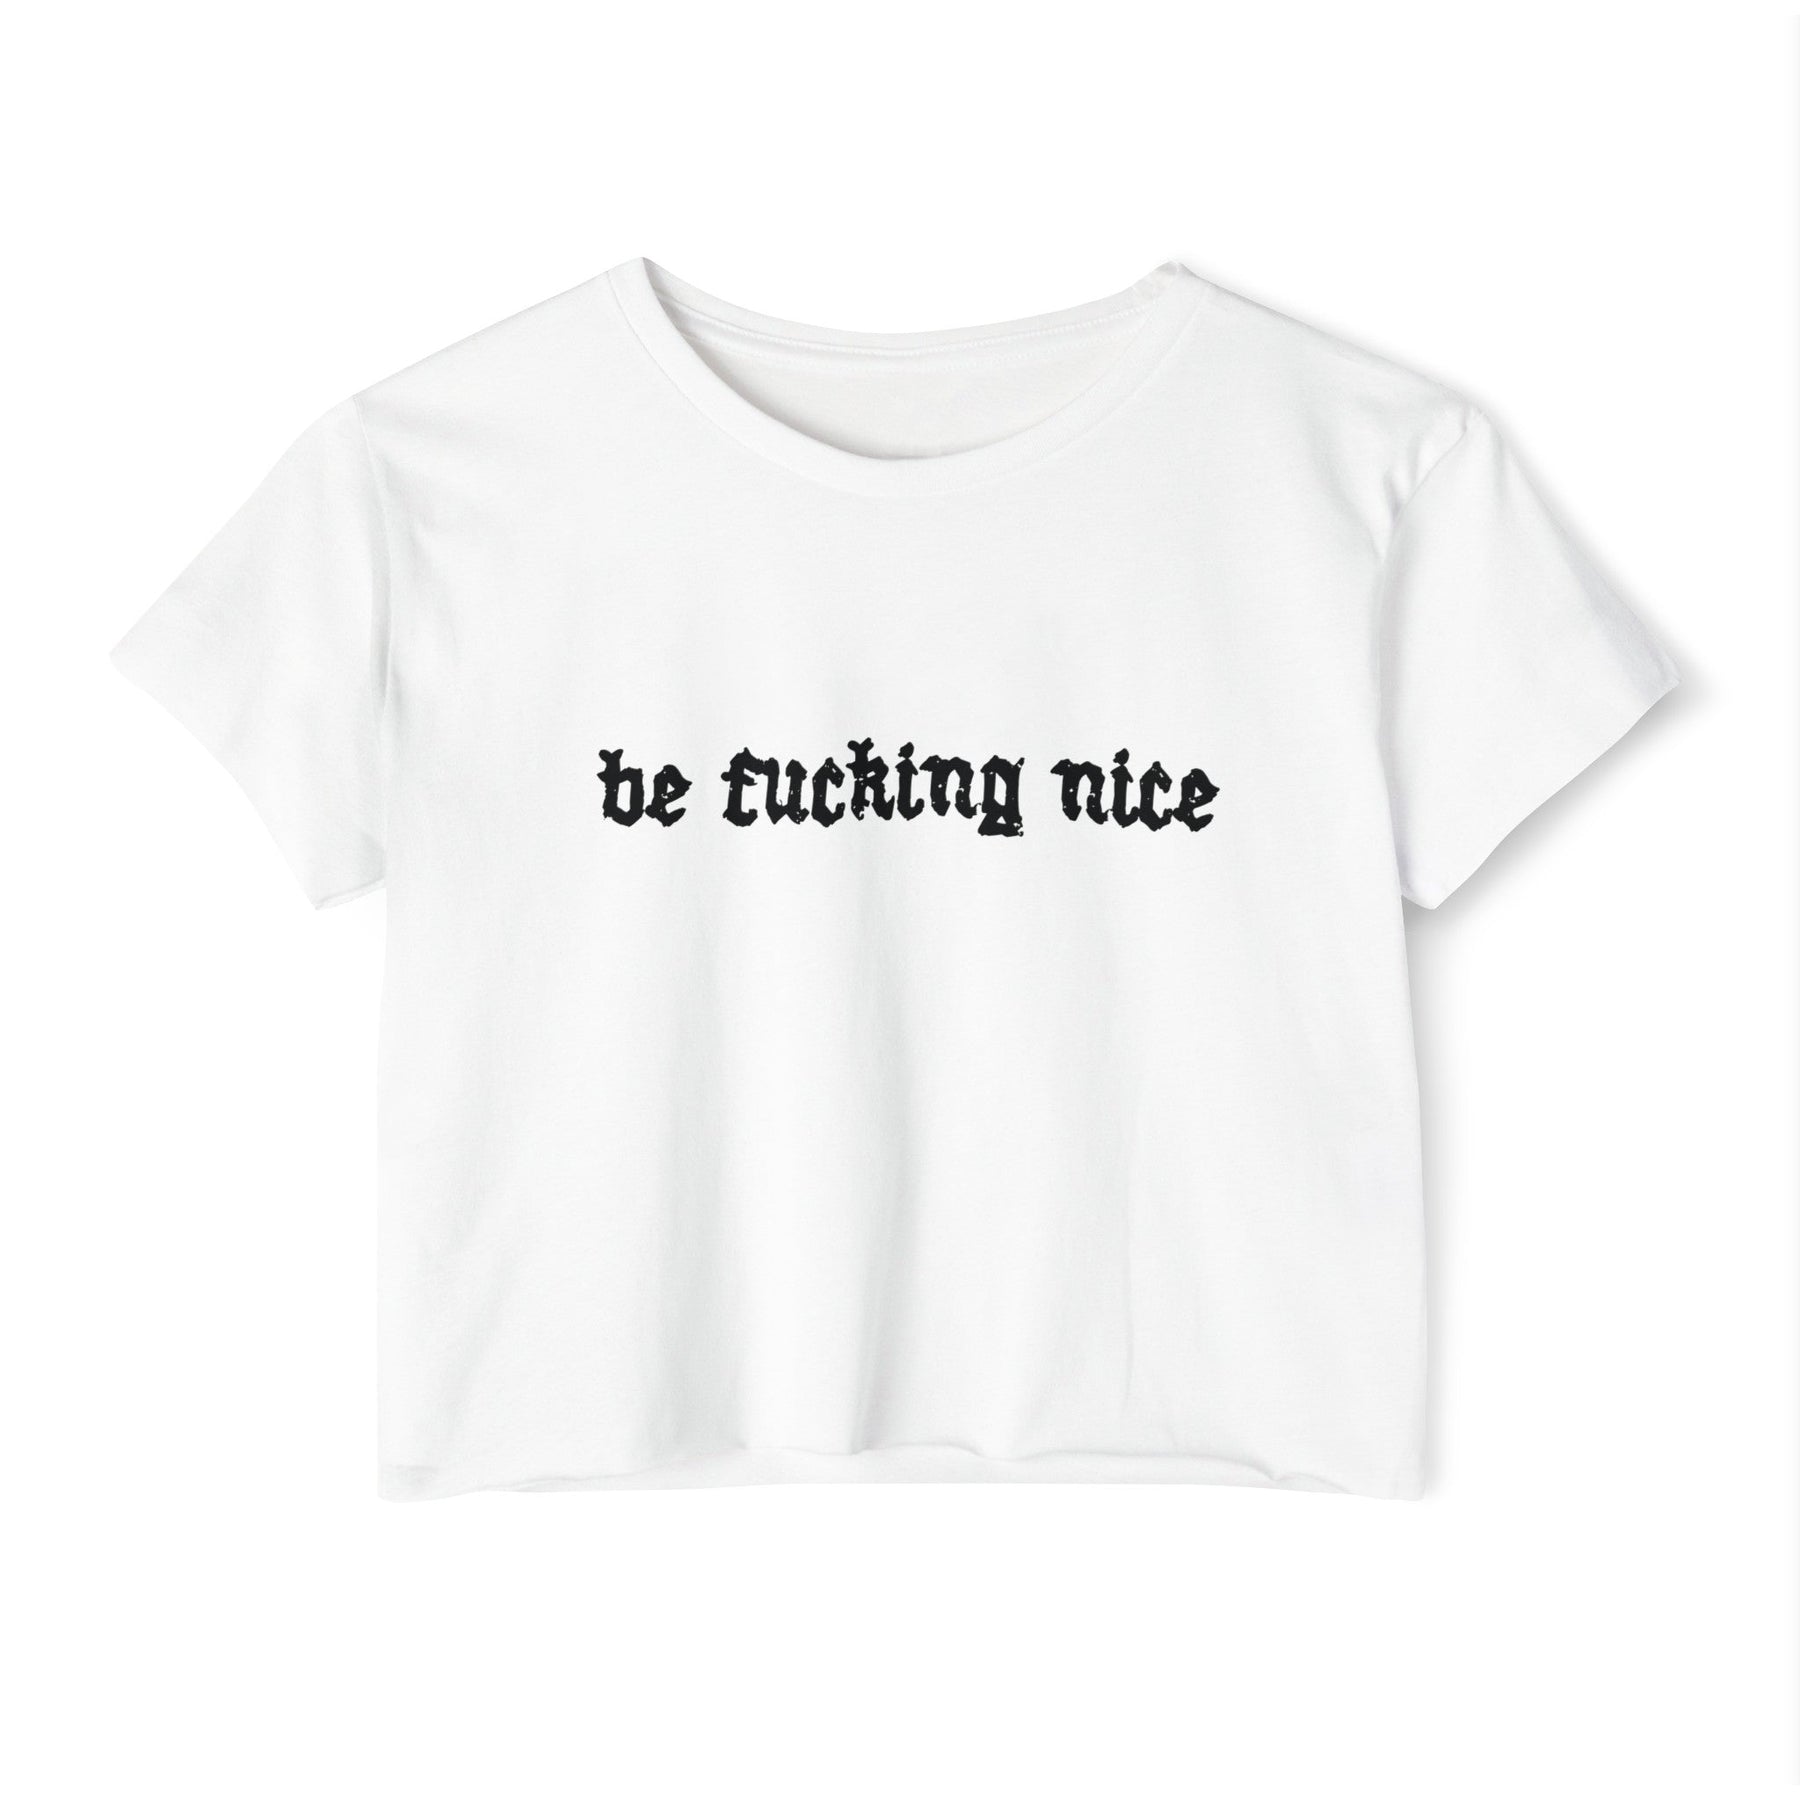 Be Fucking Nice Women's Lightweight Crop Top - Goth Cloth Co.T - Shirt23434053621360682731